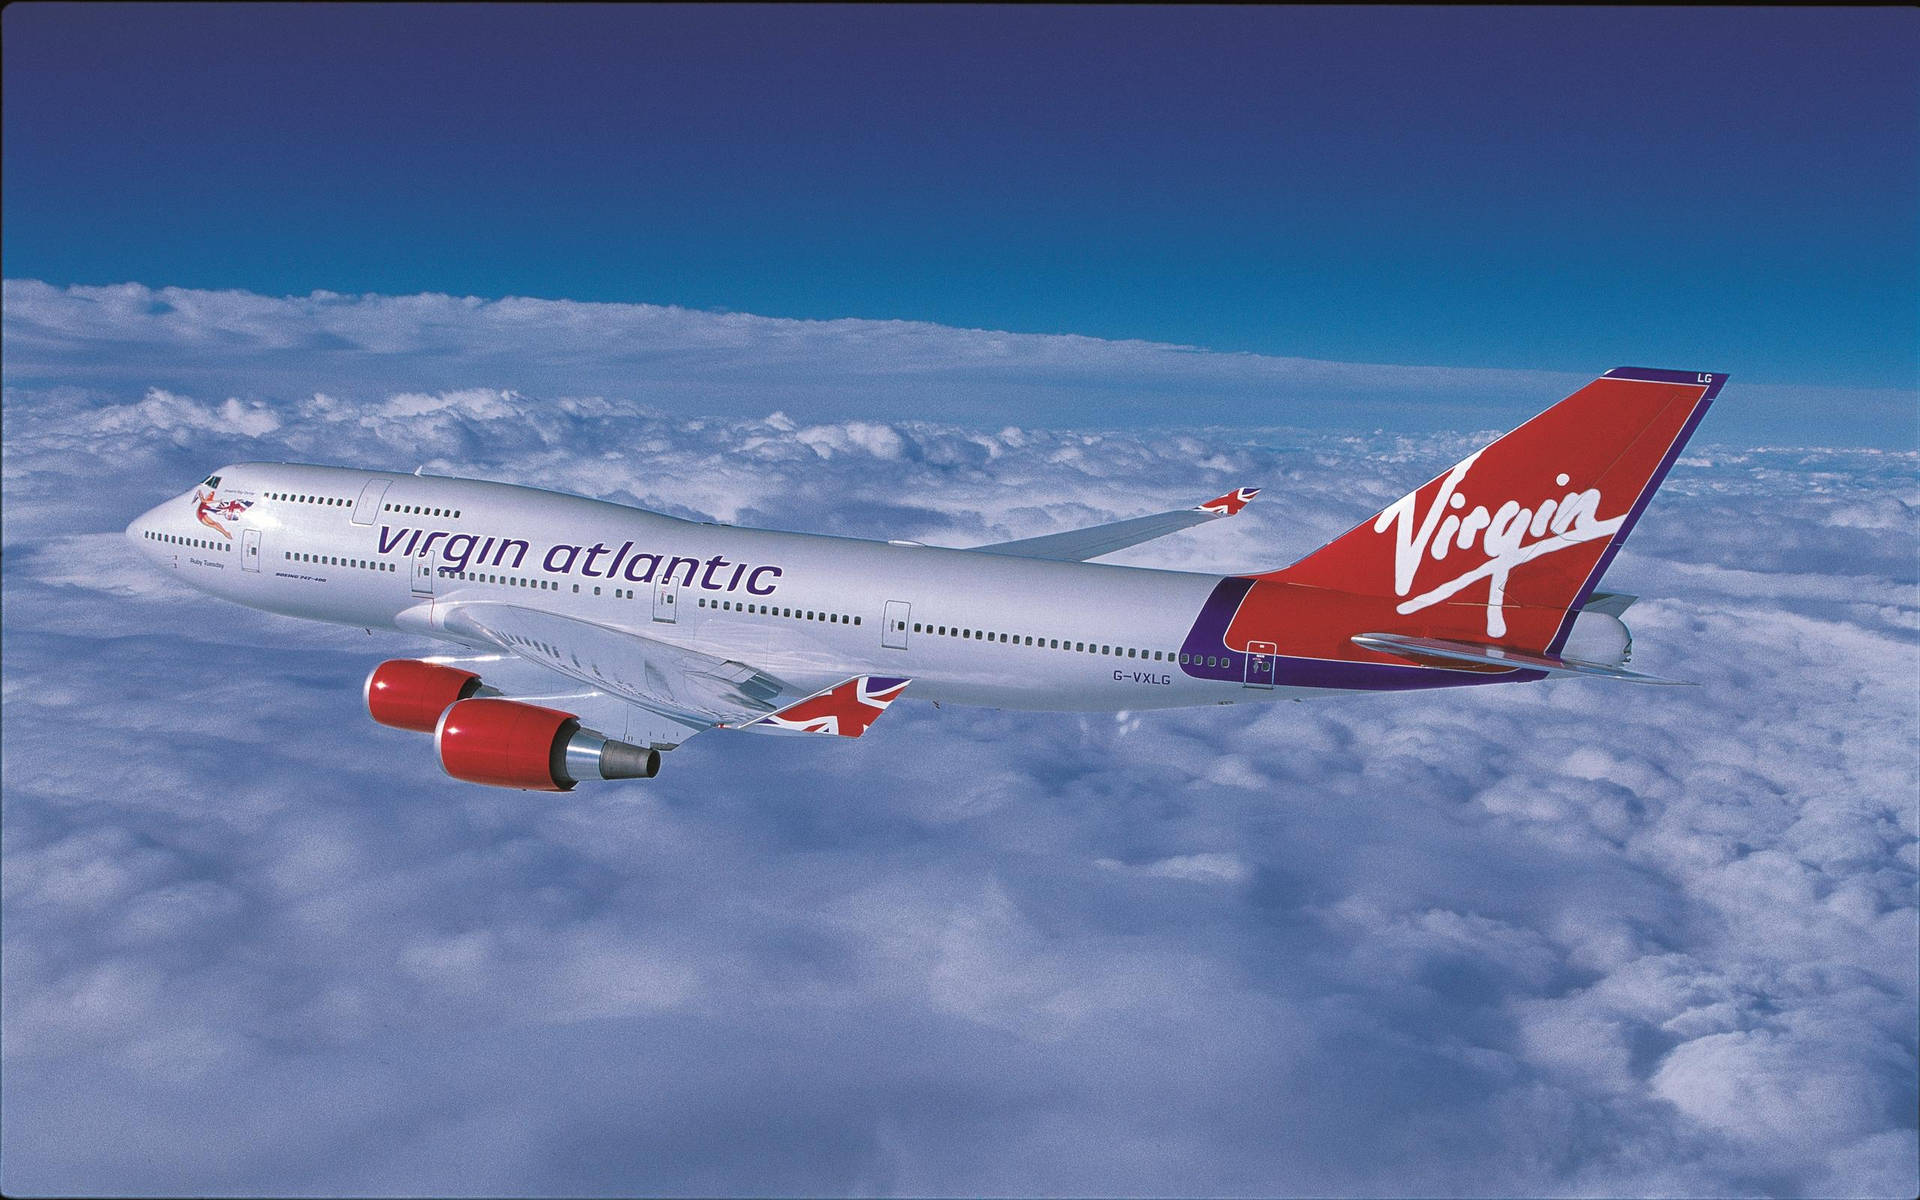 Flying Virgin Atlantic Airplane Wallpaper